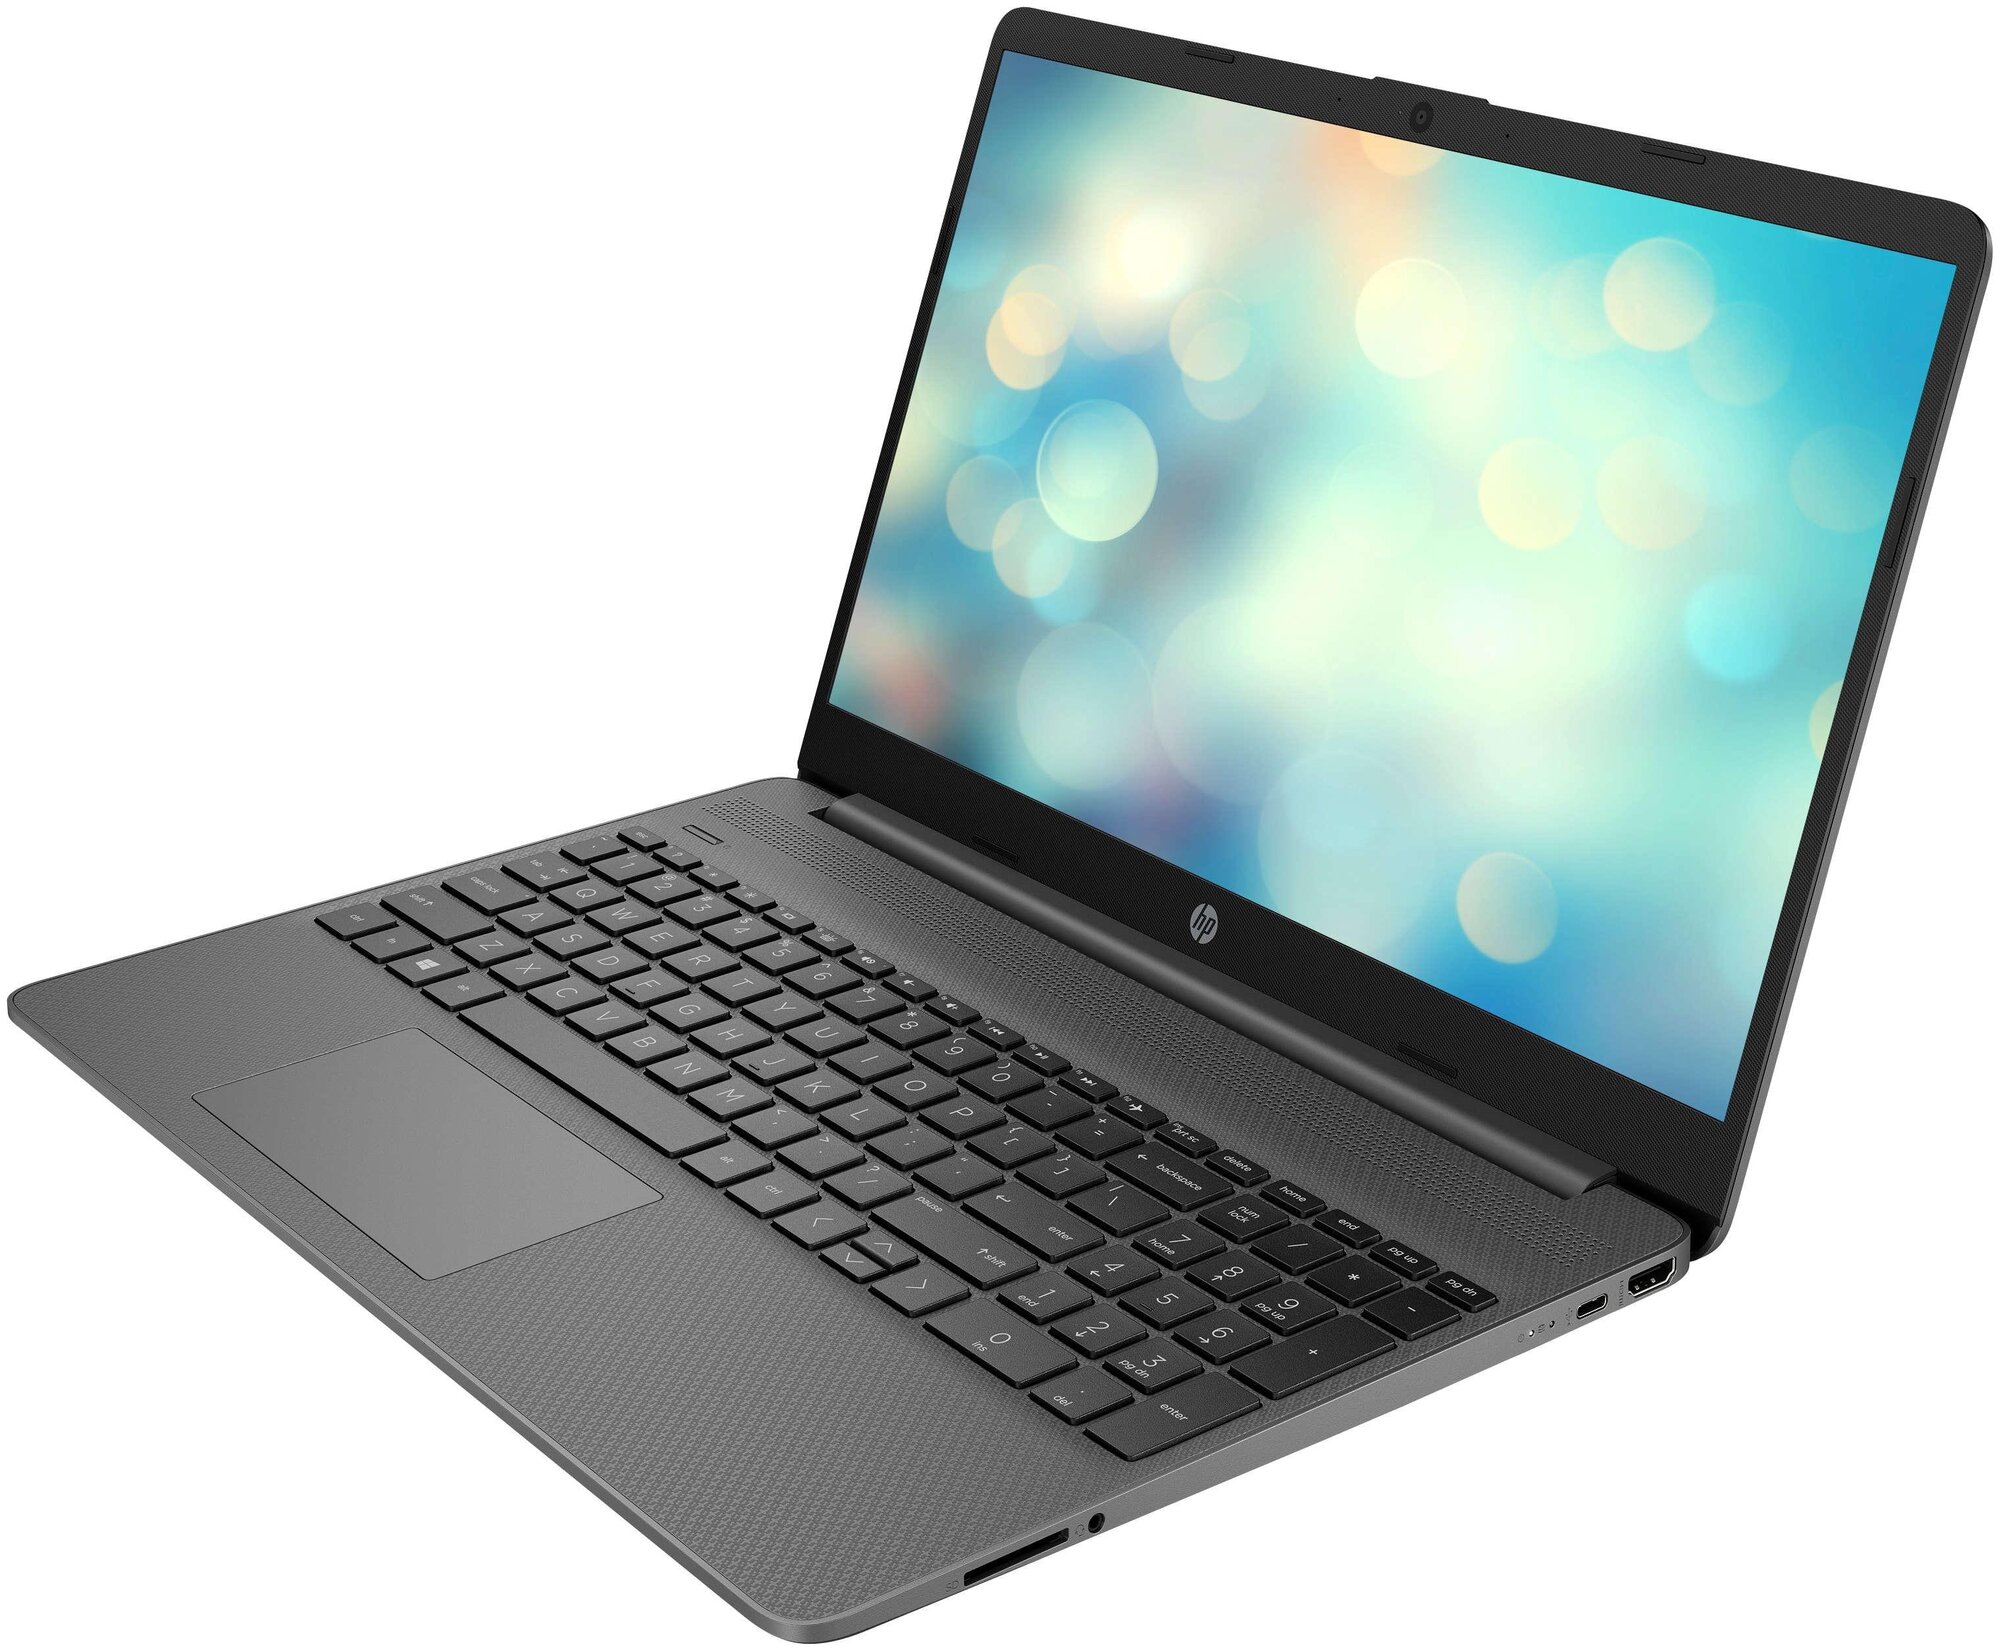 Ноутбук HP 15s-fq3025ur 3V048EA (Intel Pentium Silver N6000 1.1GHz/4096Mb/256Gb SSD/No ODD/Intel UHD Graphics/Wi-Fi/Cam/15.6/1920x1080/FreeDOS)